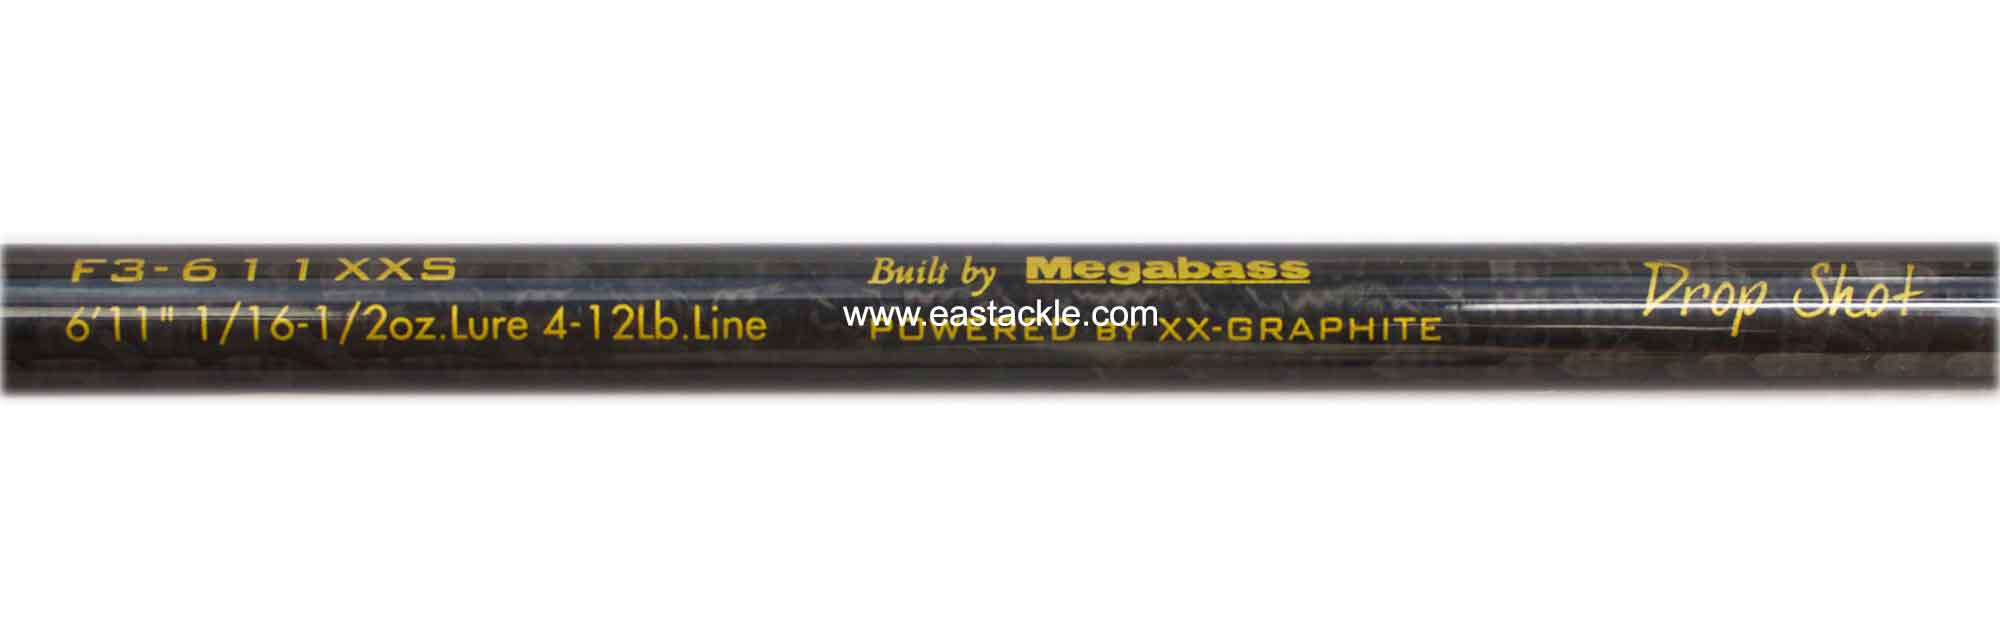 Megabass - Orochi XX Spinning - F3-611XXS - Drop Shot - Spinning Rod - Blank Specifications